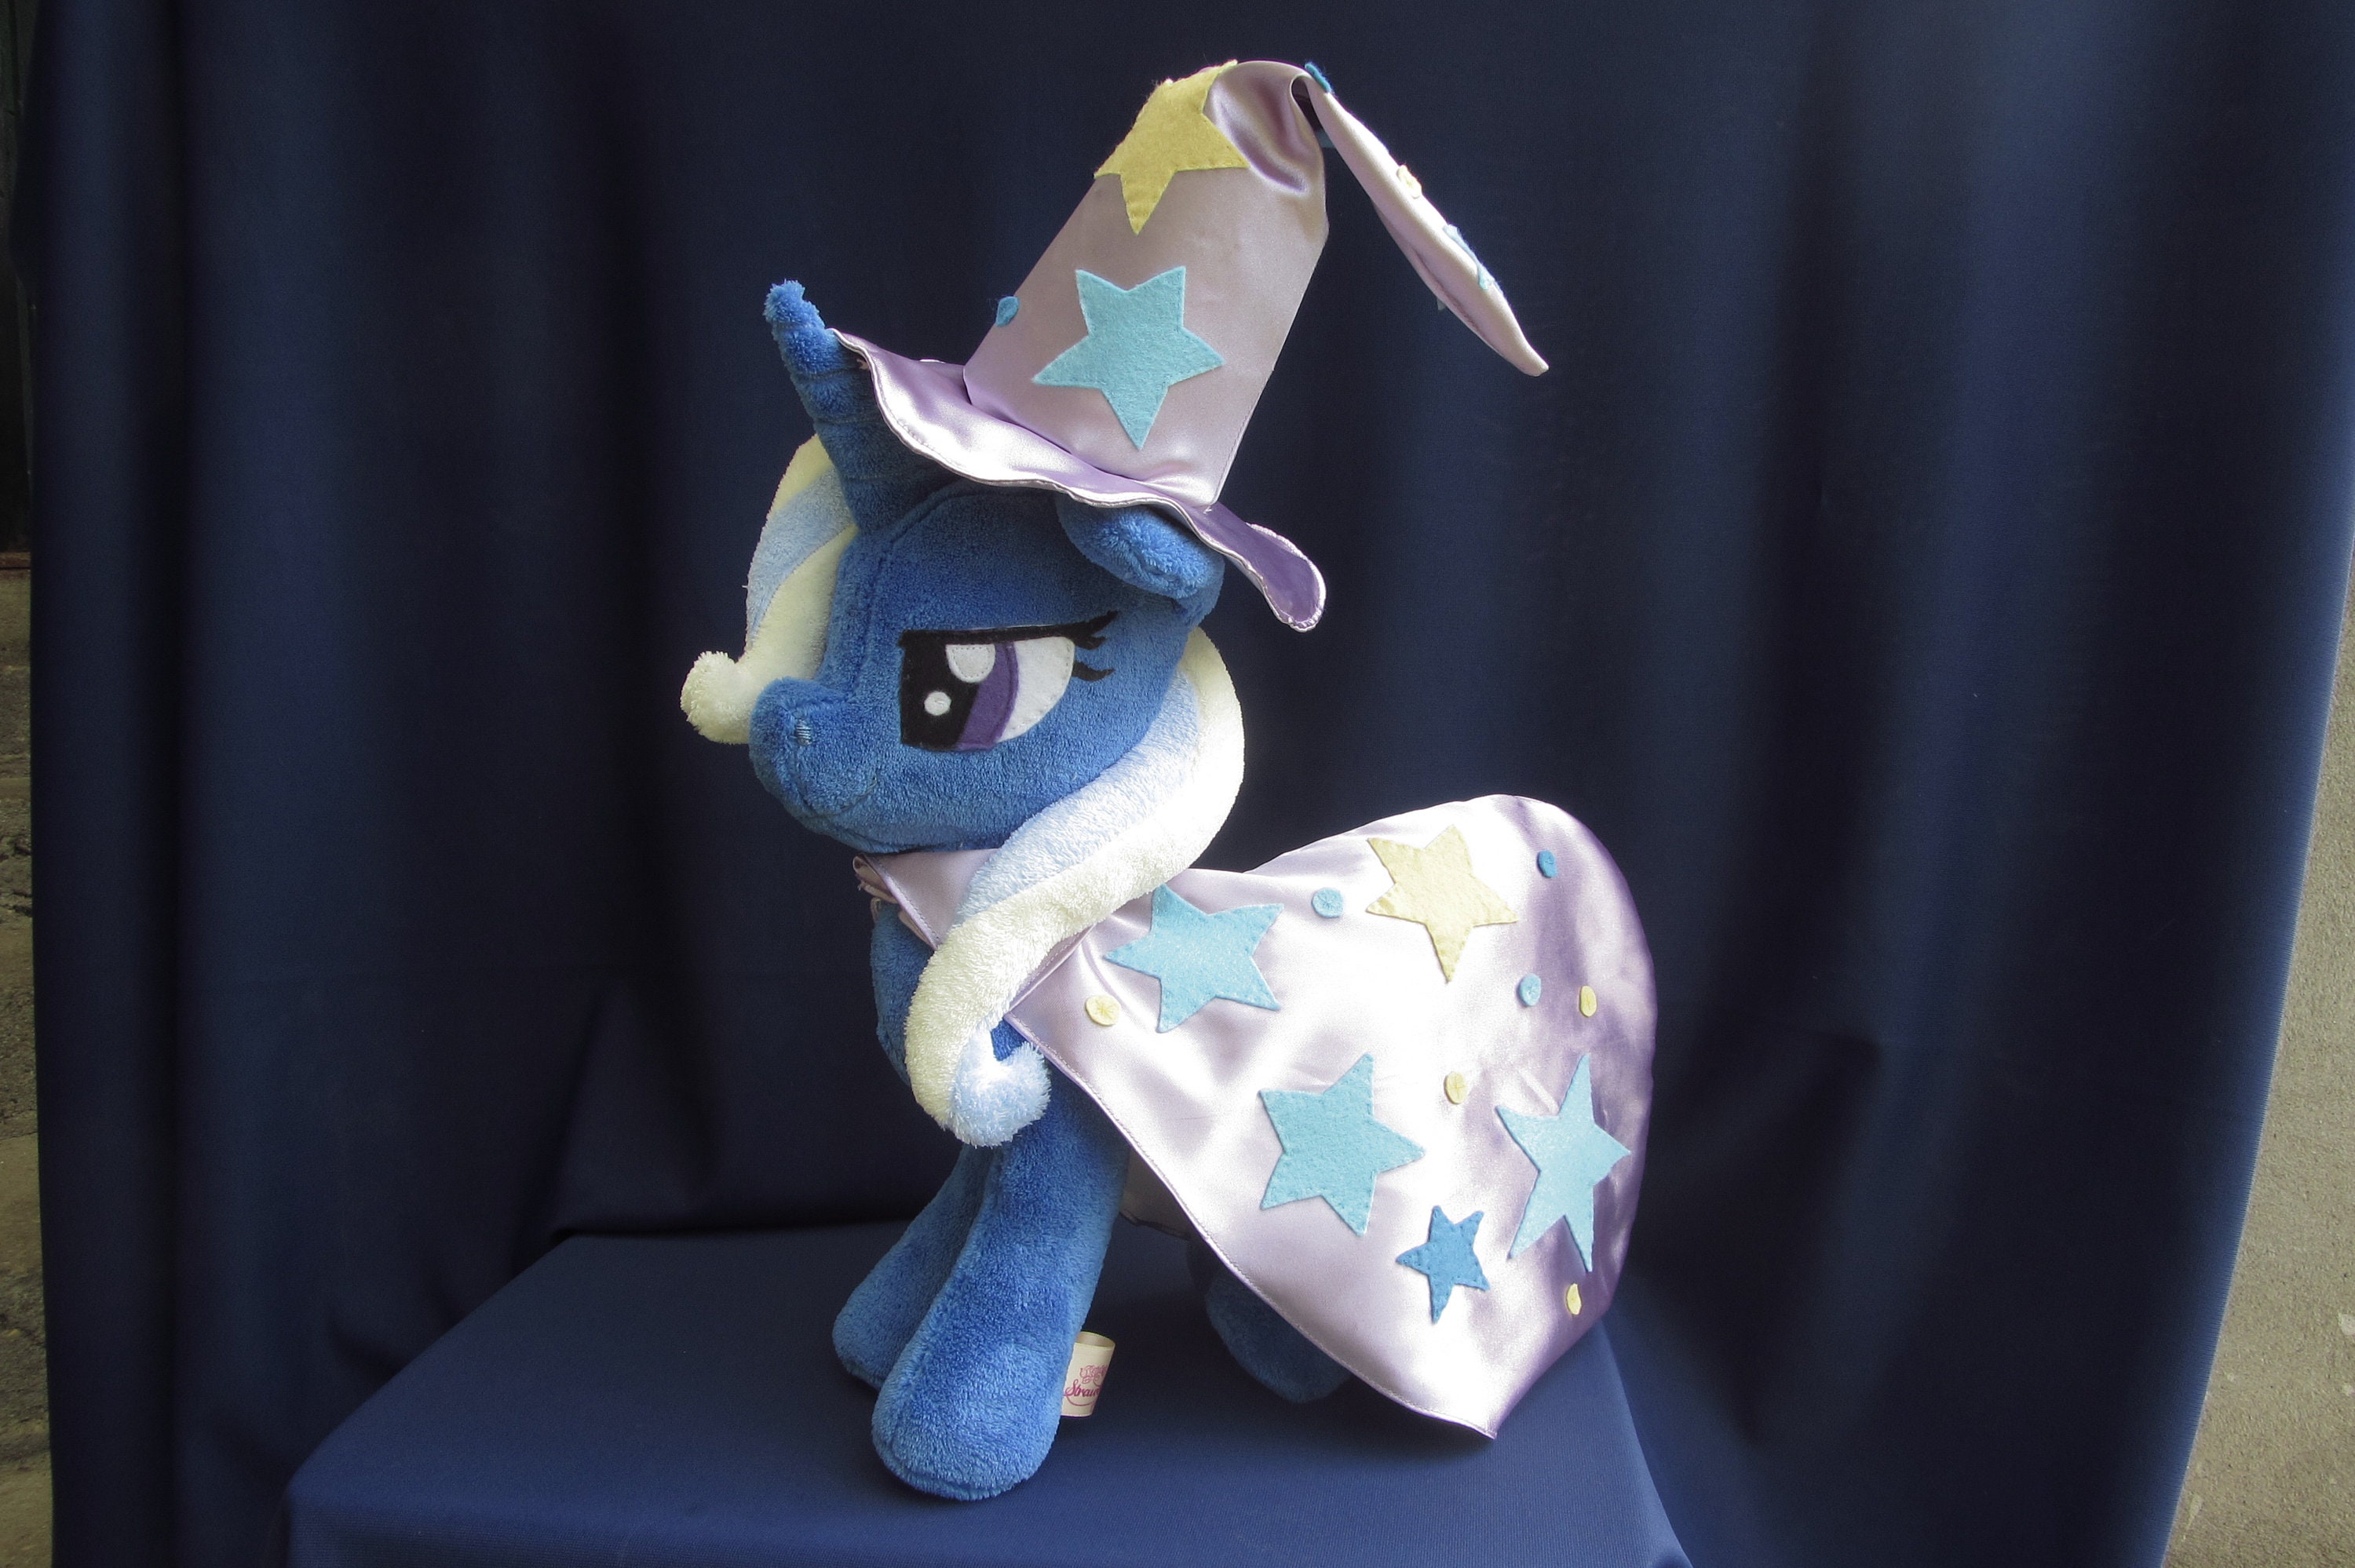 My Little Pony Friendship is Magic Trixie Lulamoon Small Plush